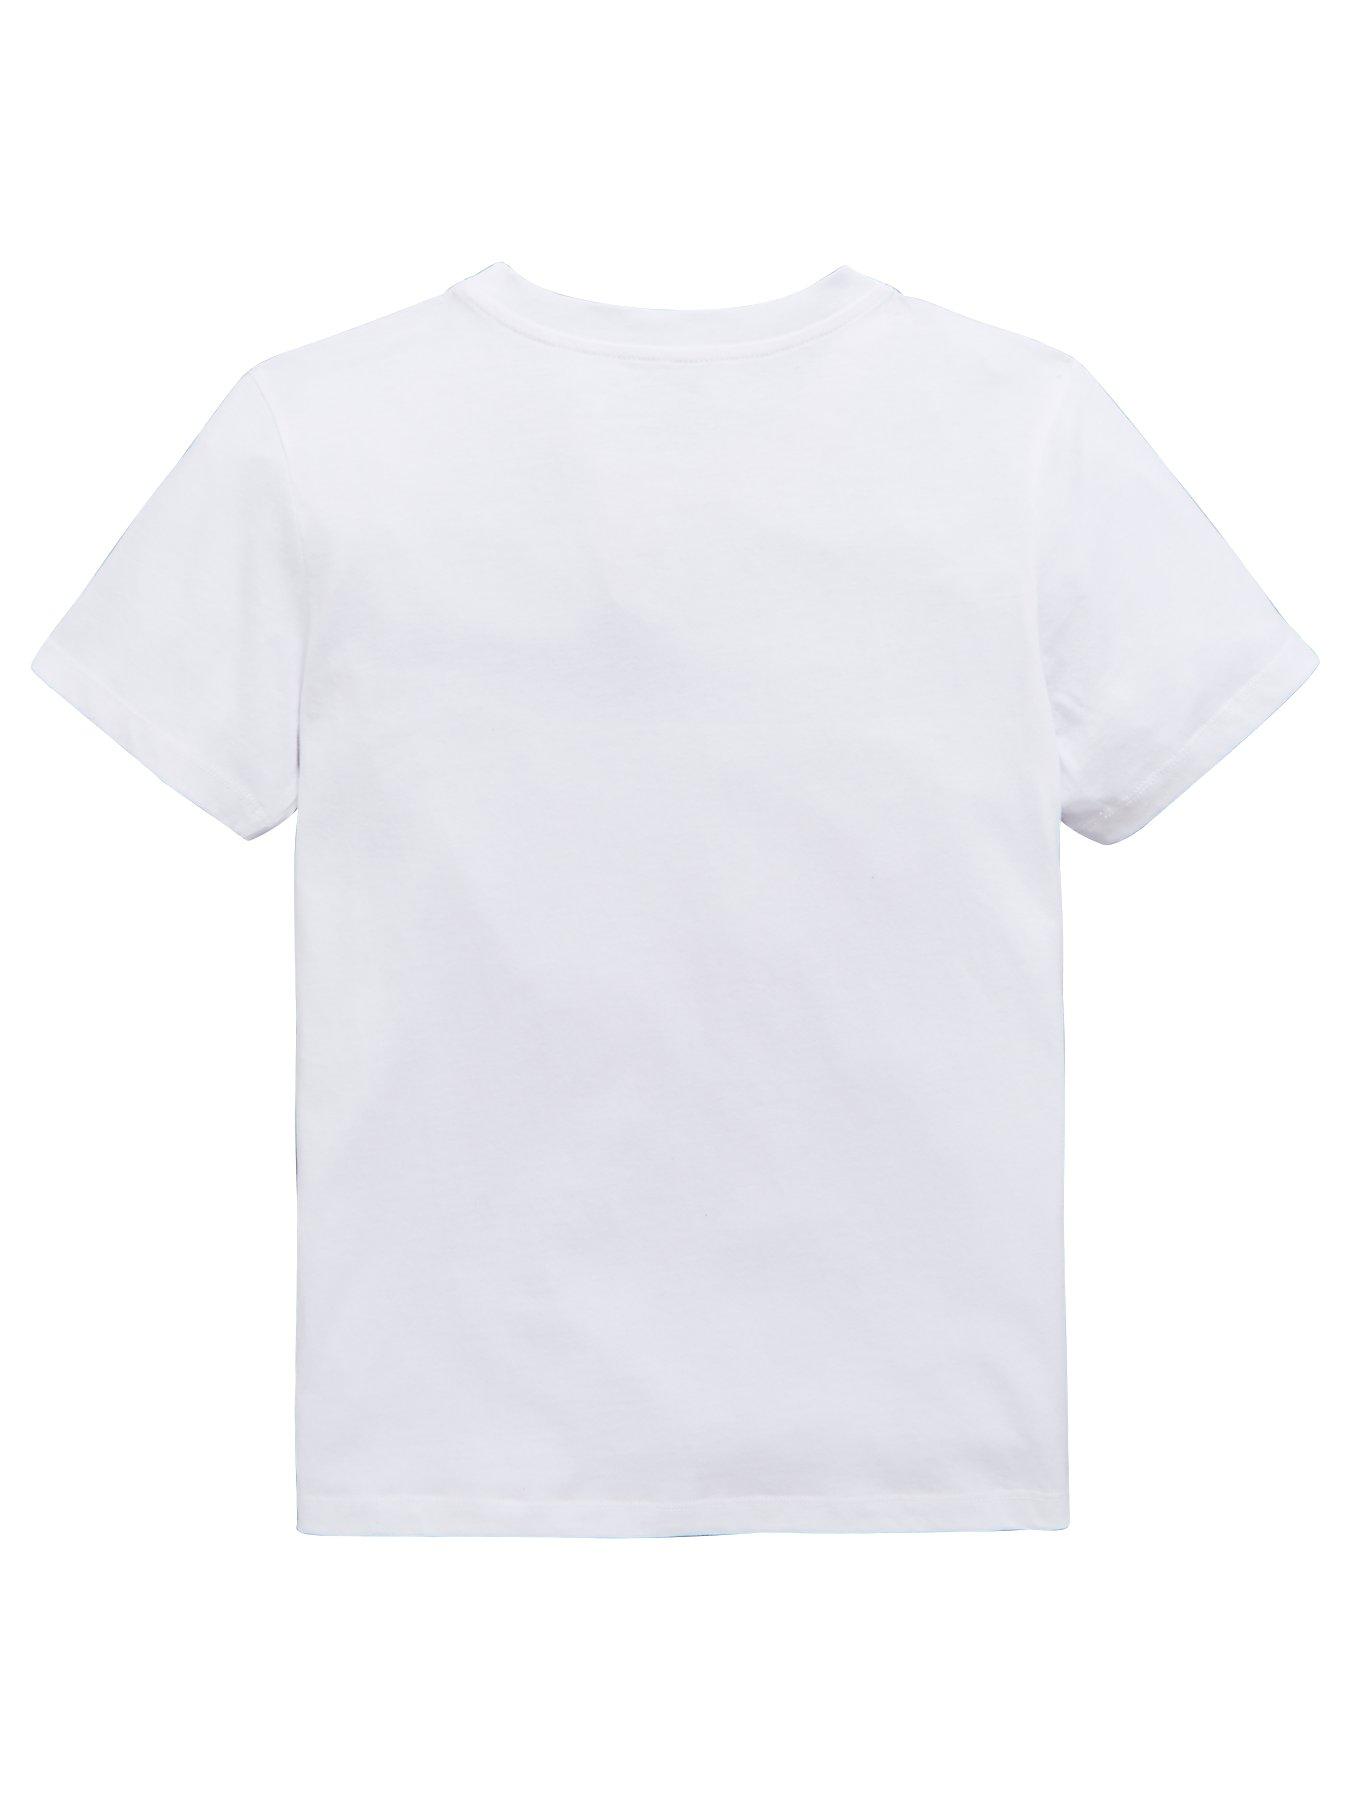 Boys Clothes Boys 2 Pack Short Sleeve Logo T-Shirts - Black/White